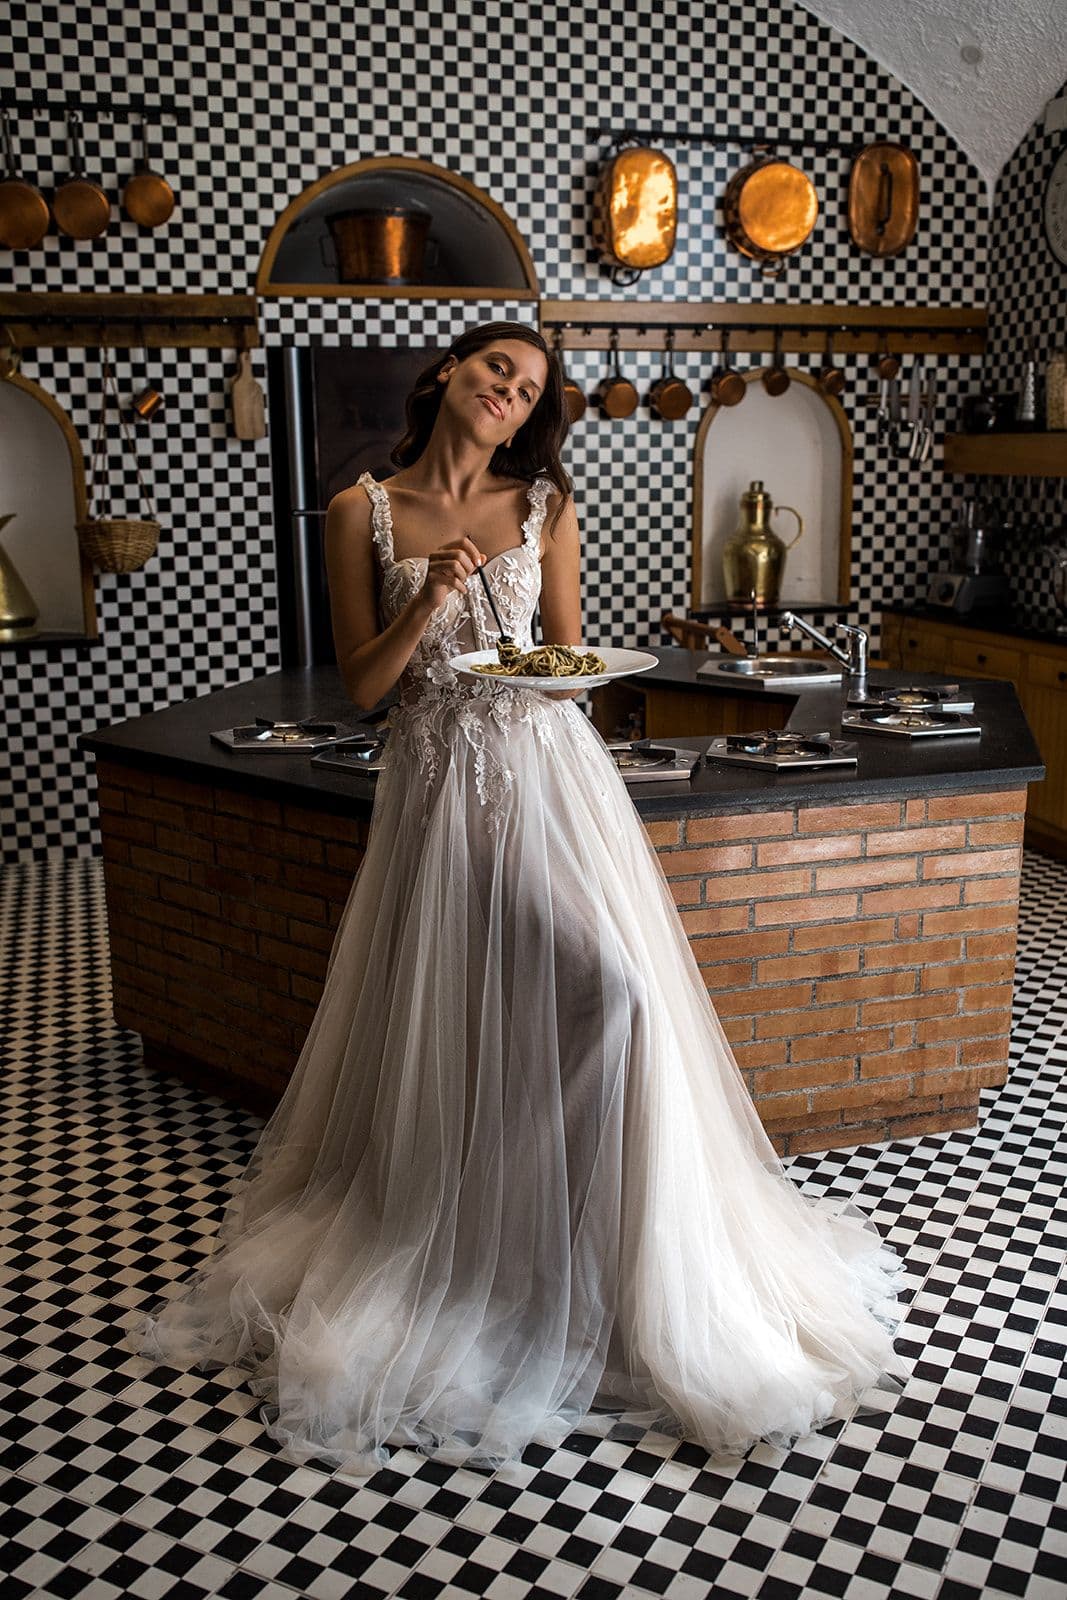 Bride wearing Berta bridal gown stands in kitchen of Villa Astor eating pasta